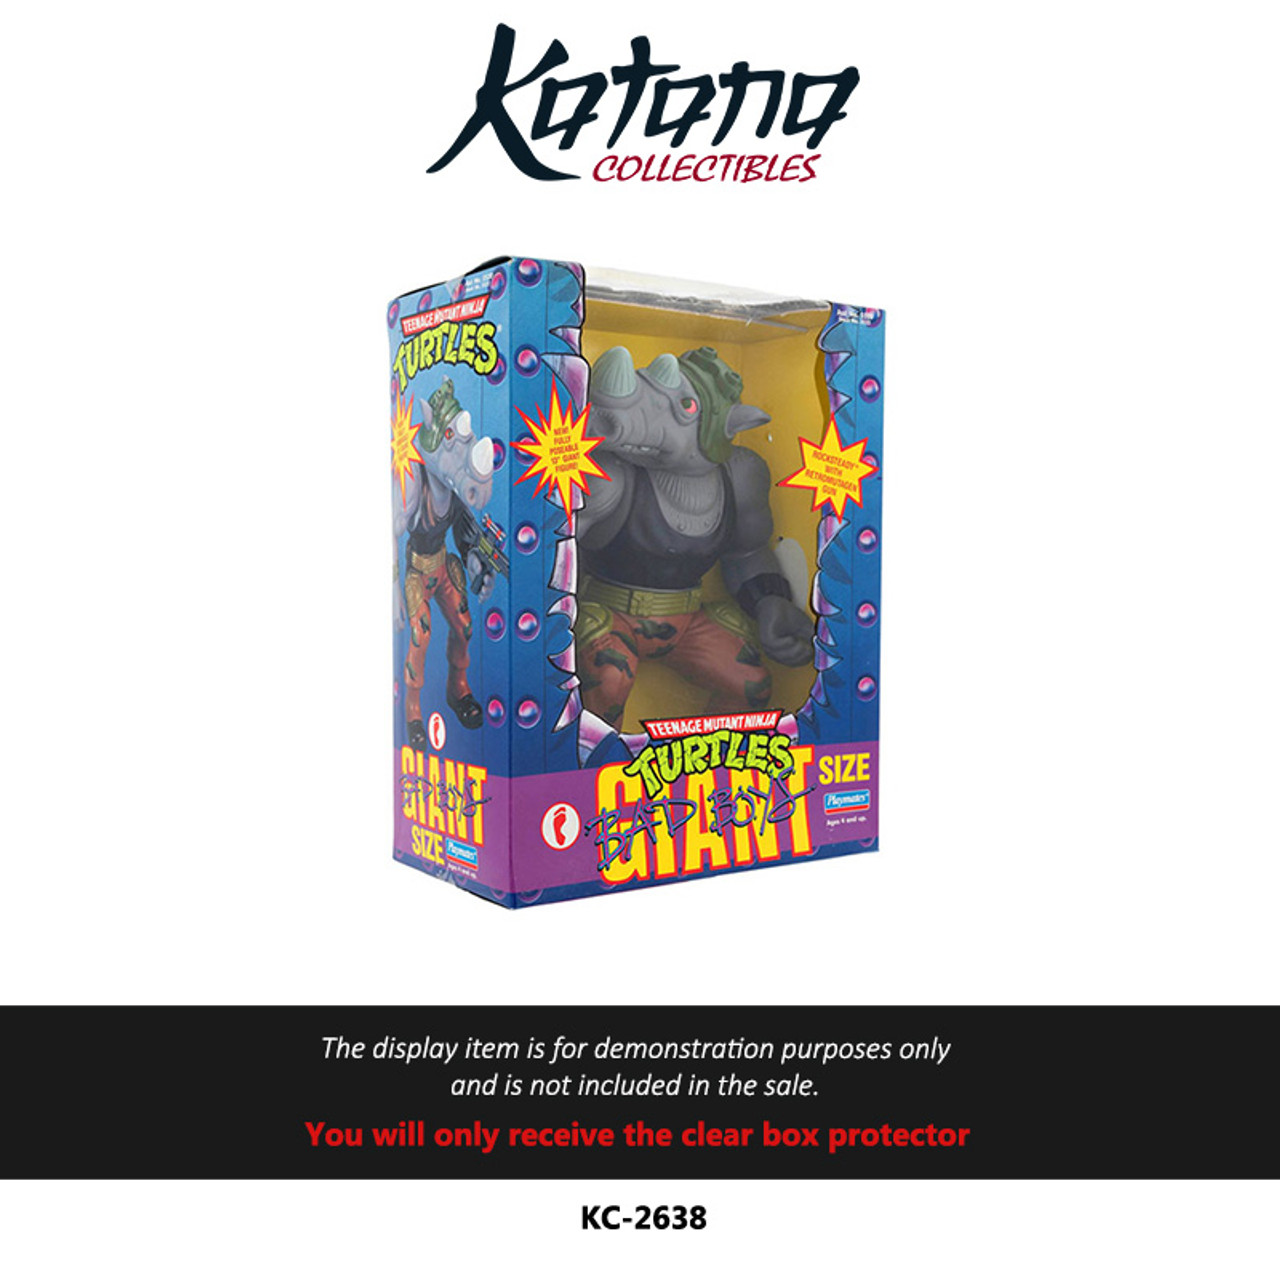 Katana Collectibles Protector For Playmates Teenage Mutant Ninja Turtles Giant Rocksteady Figure